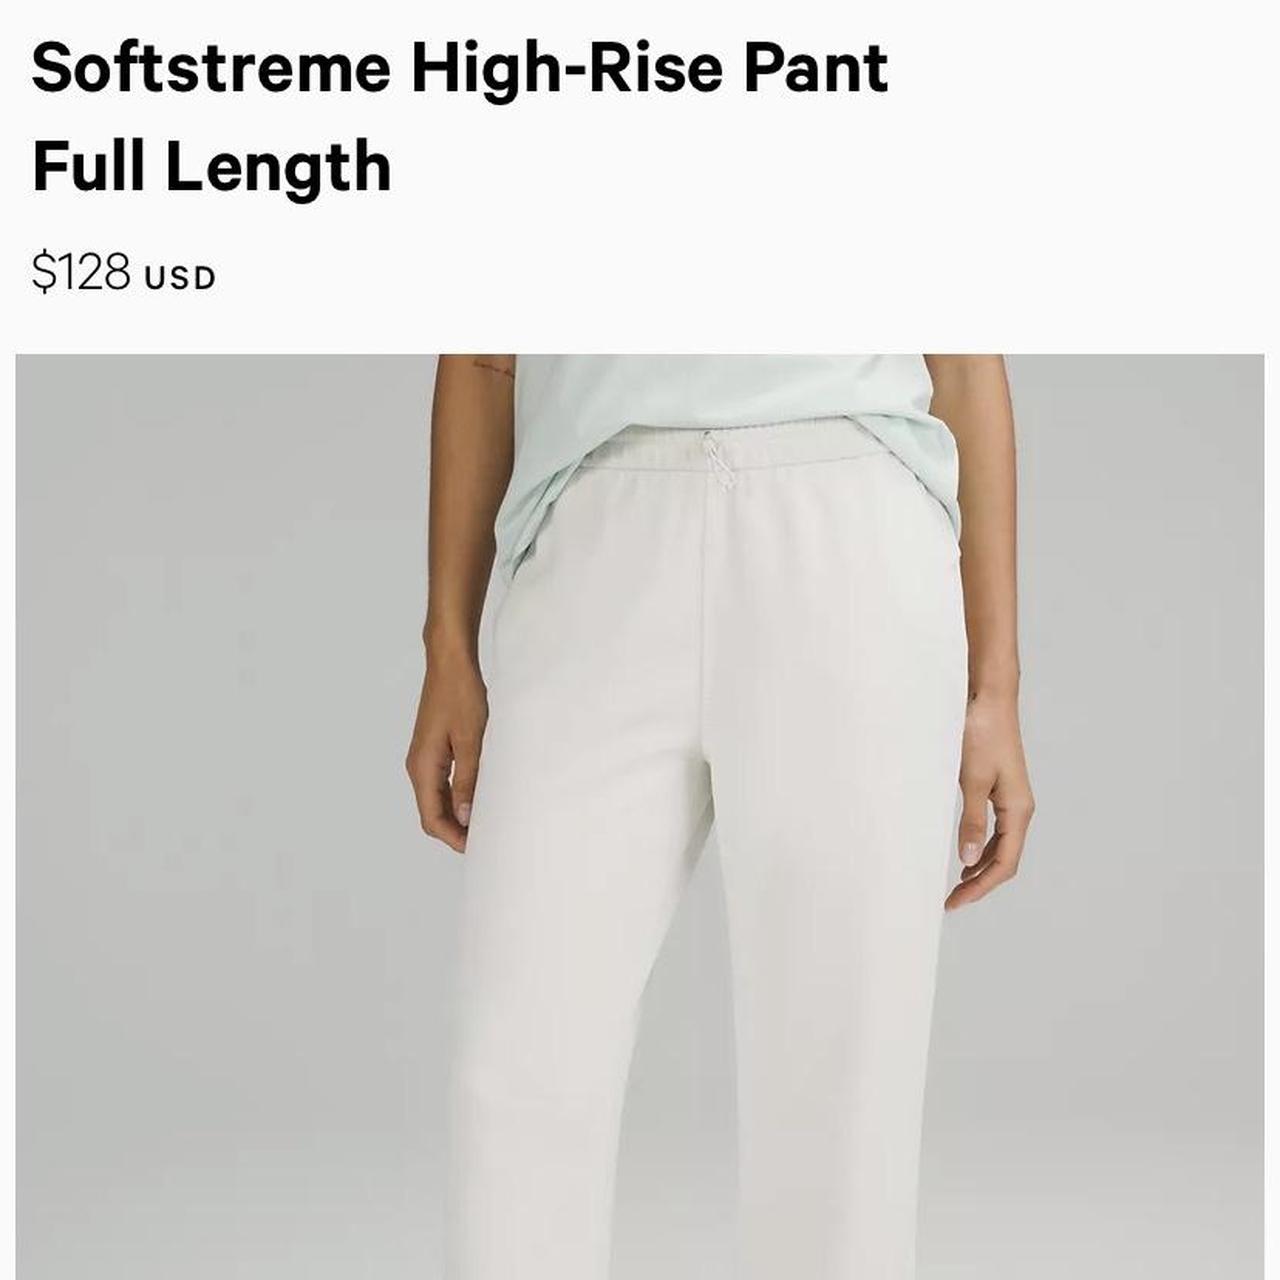 Lululemon Softstreme High Rise Pants